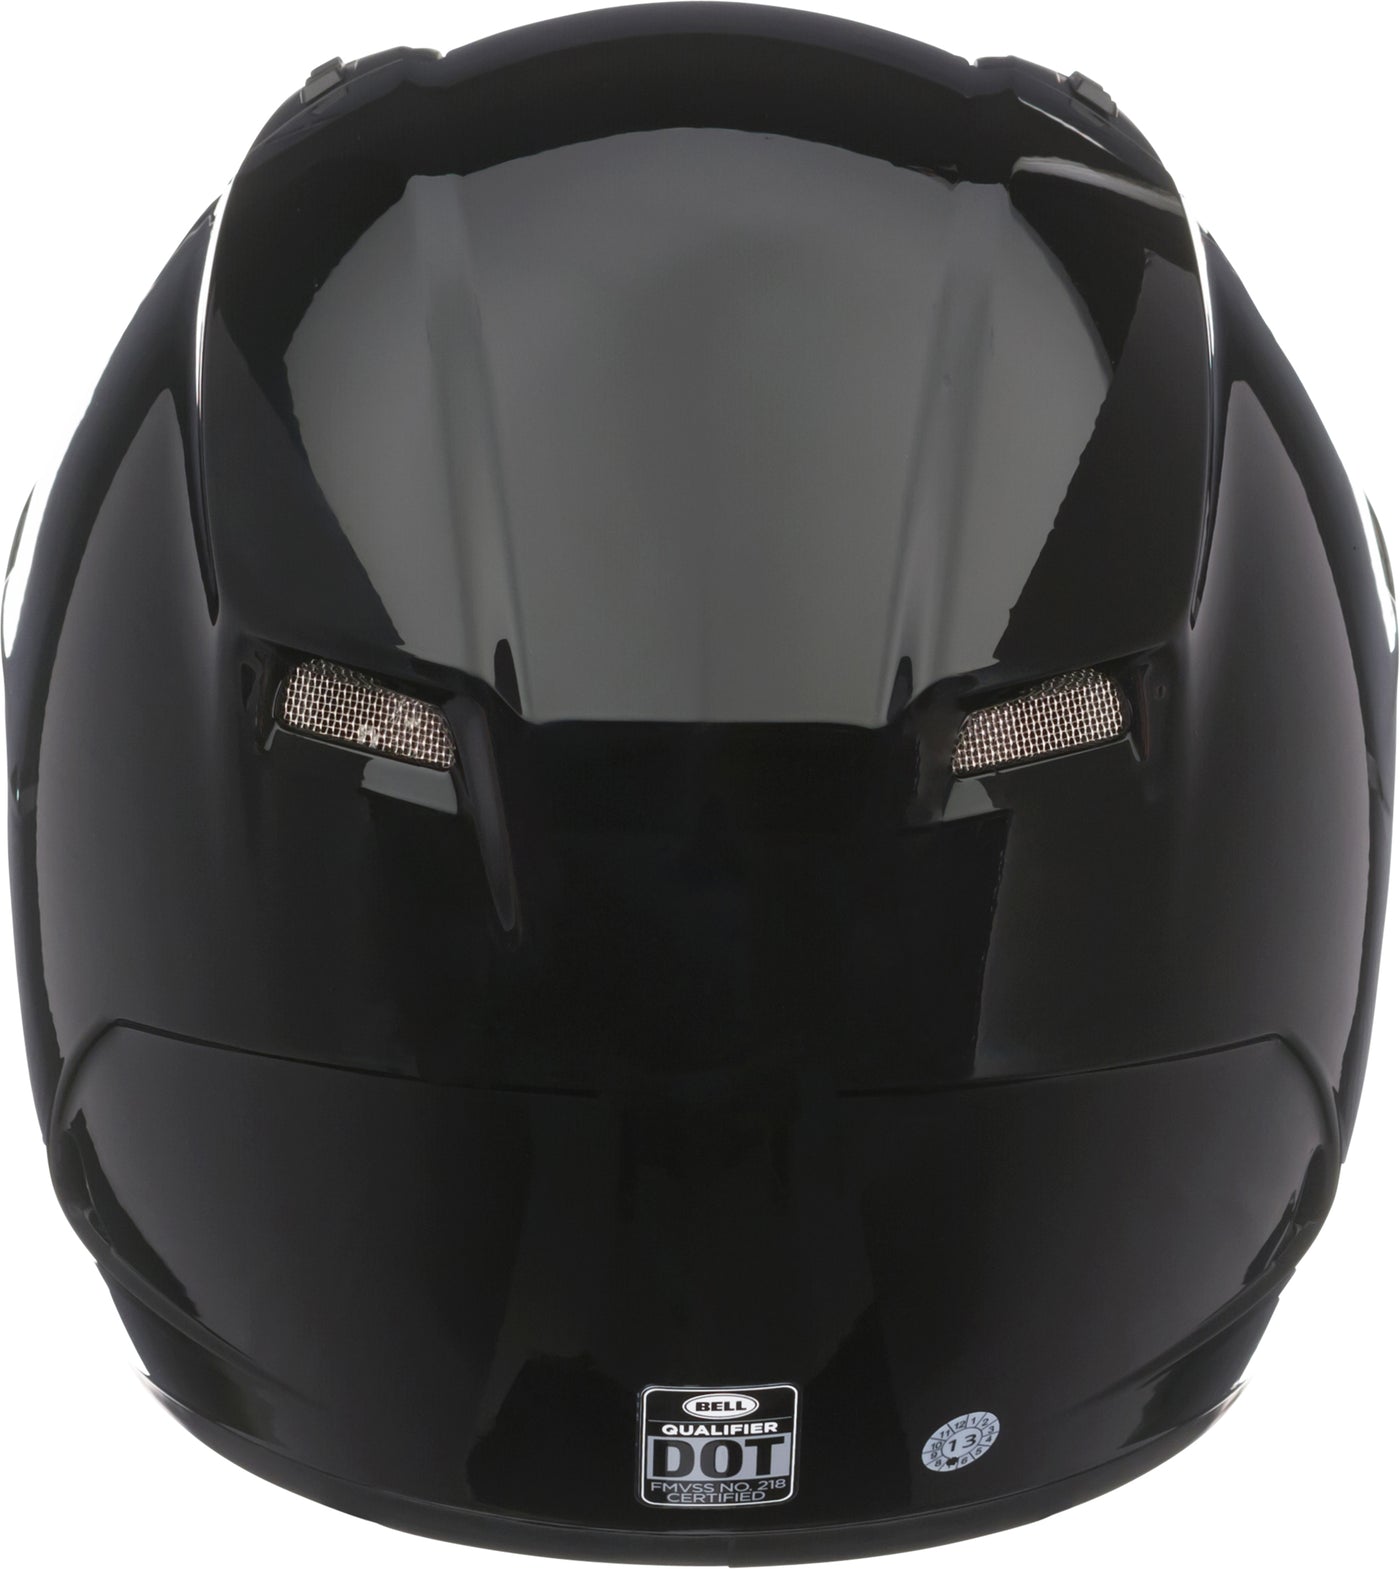 Bell Helmets Qualifier - Gloss Black